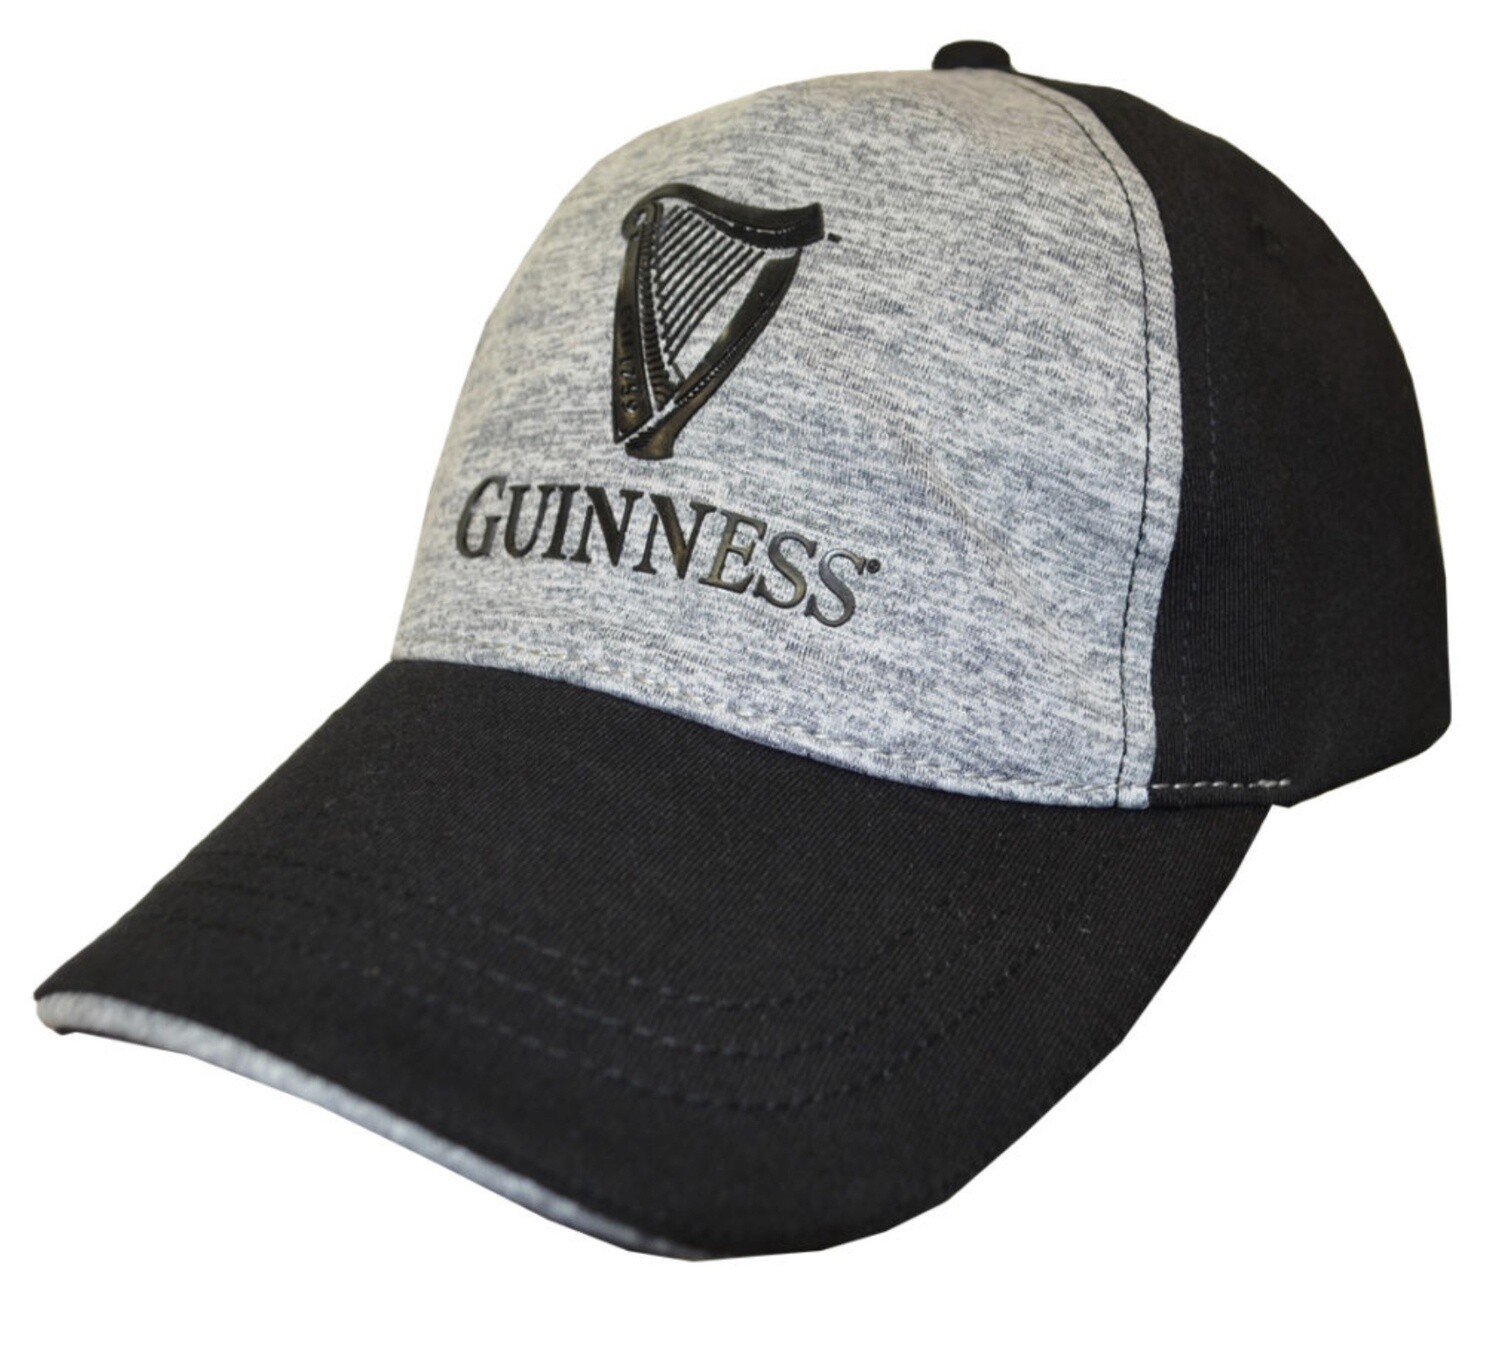 Guinness - Black and Grey Preformance Baseball Hat